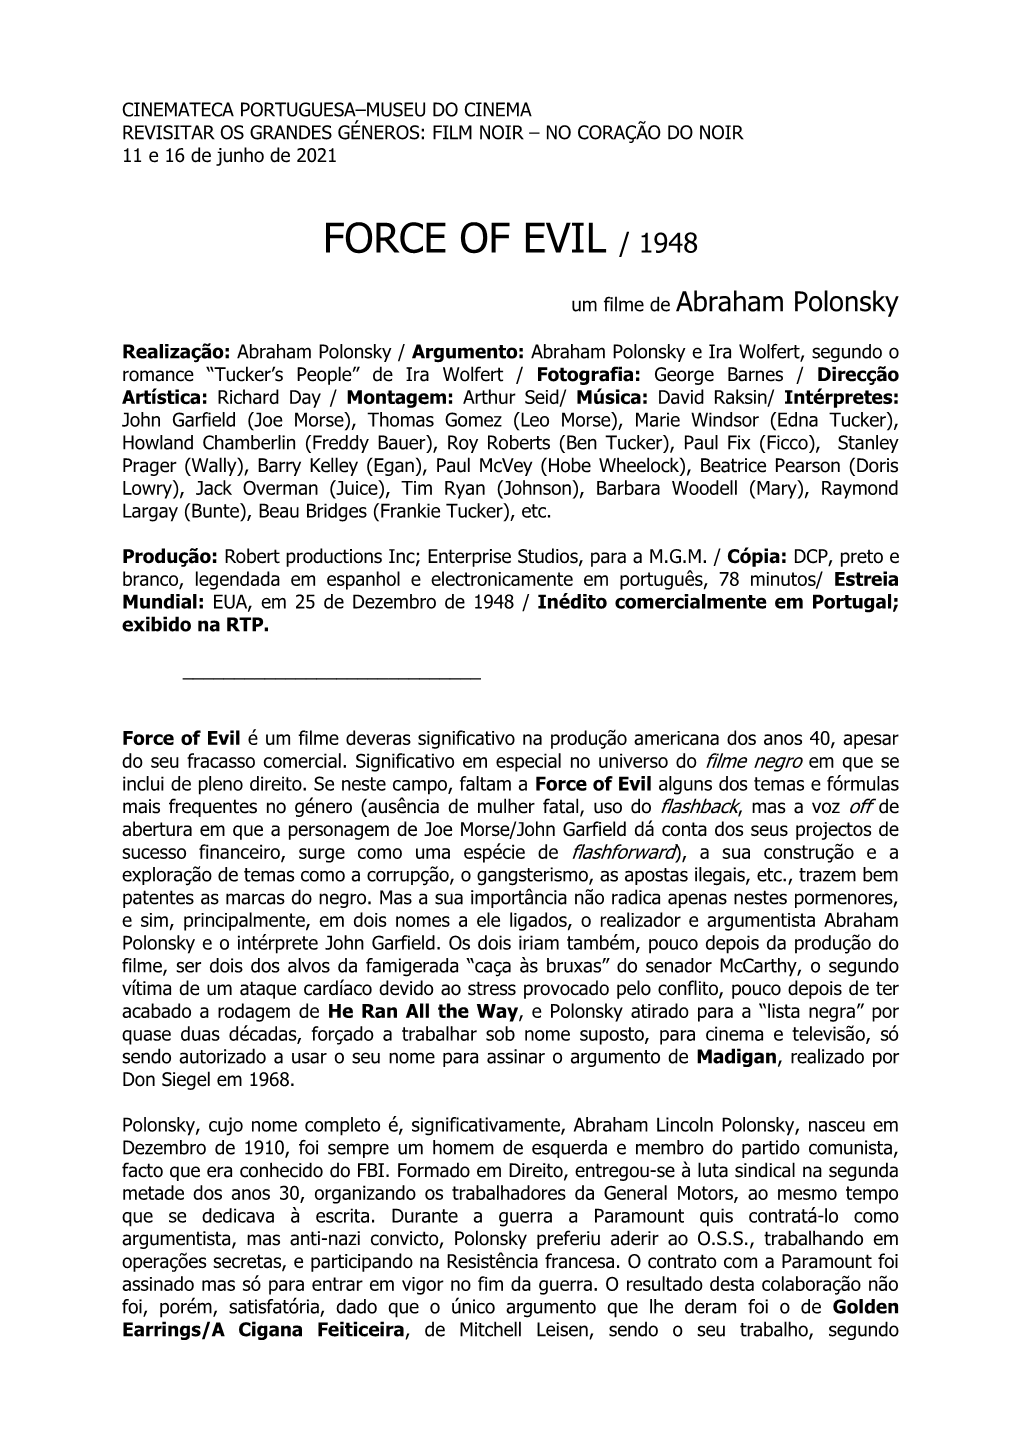 Force of Evil / 1948